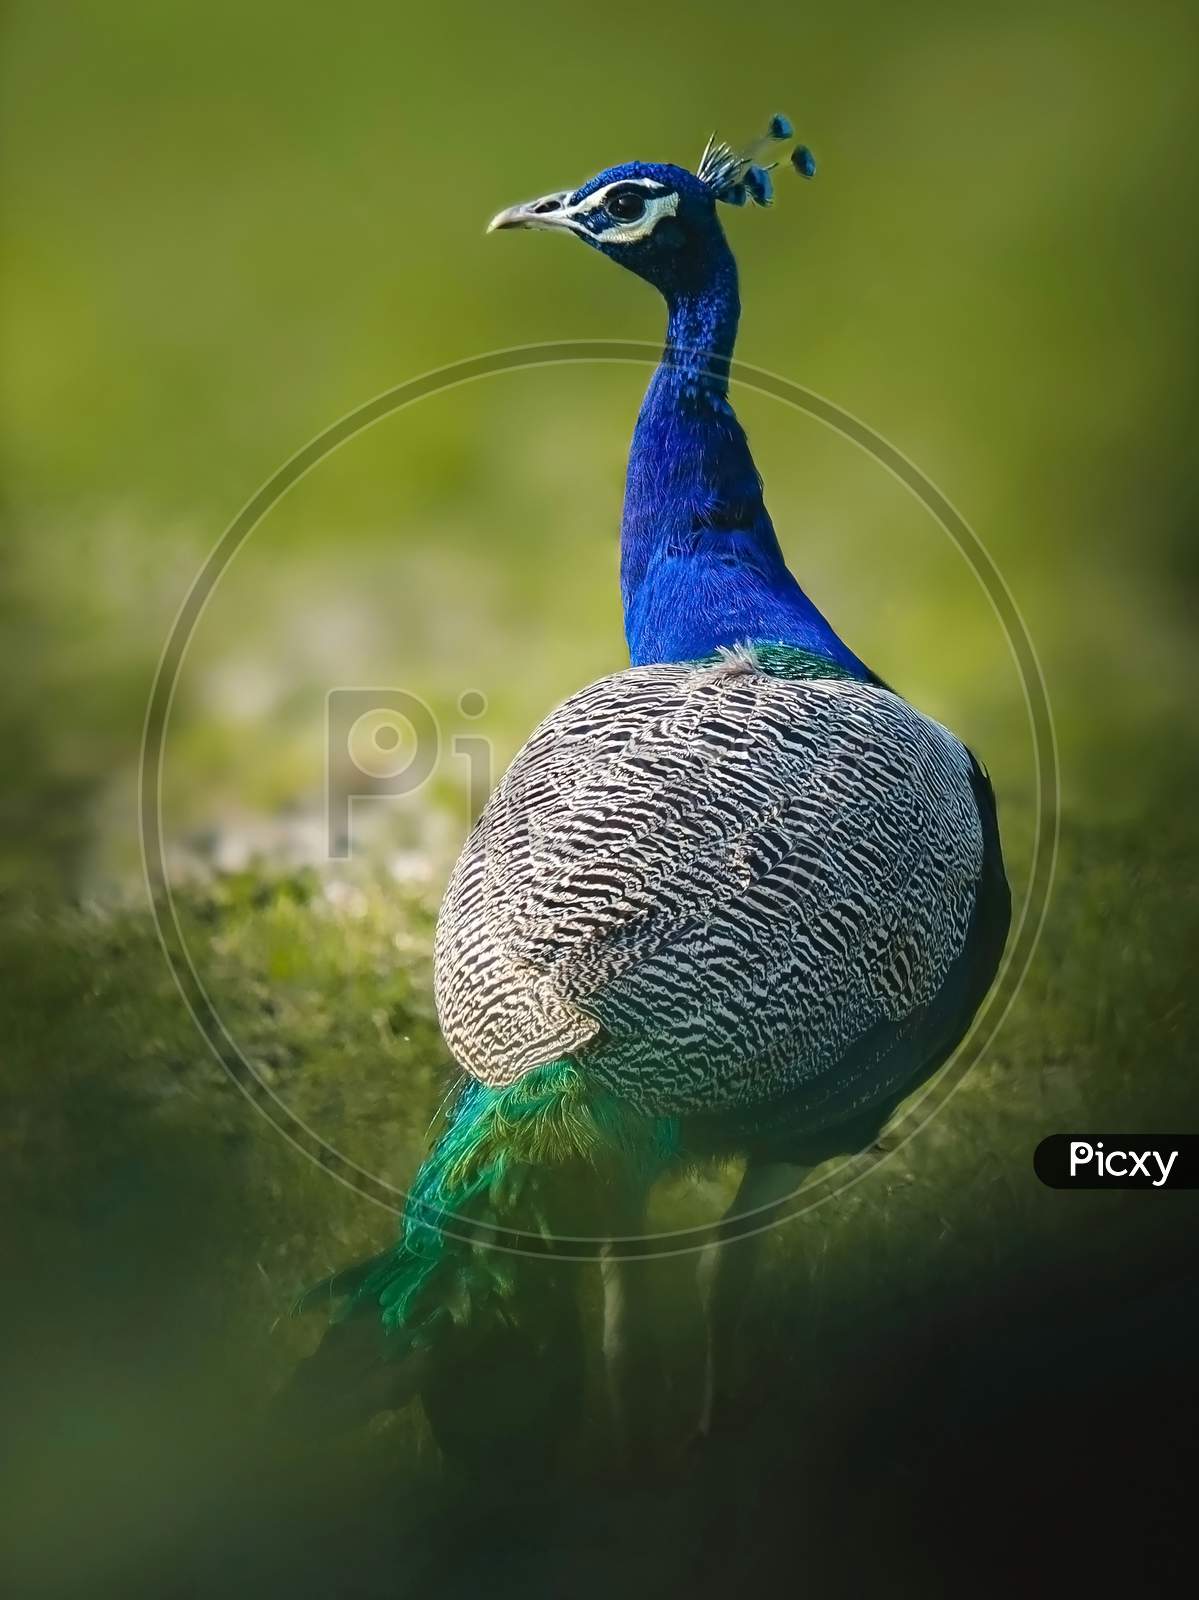 Bird name- indian peafowl (Peacock).